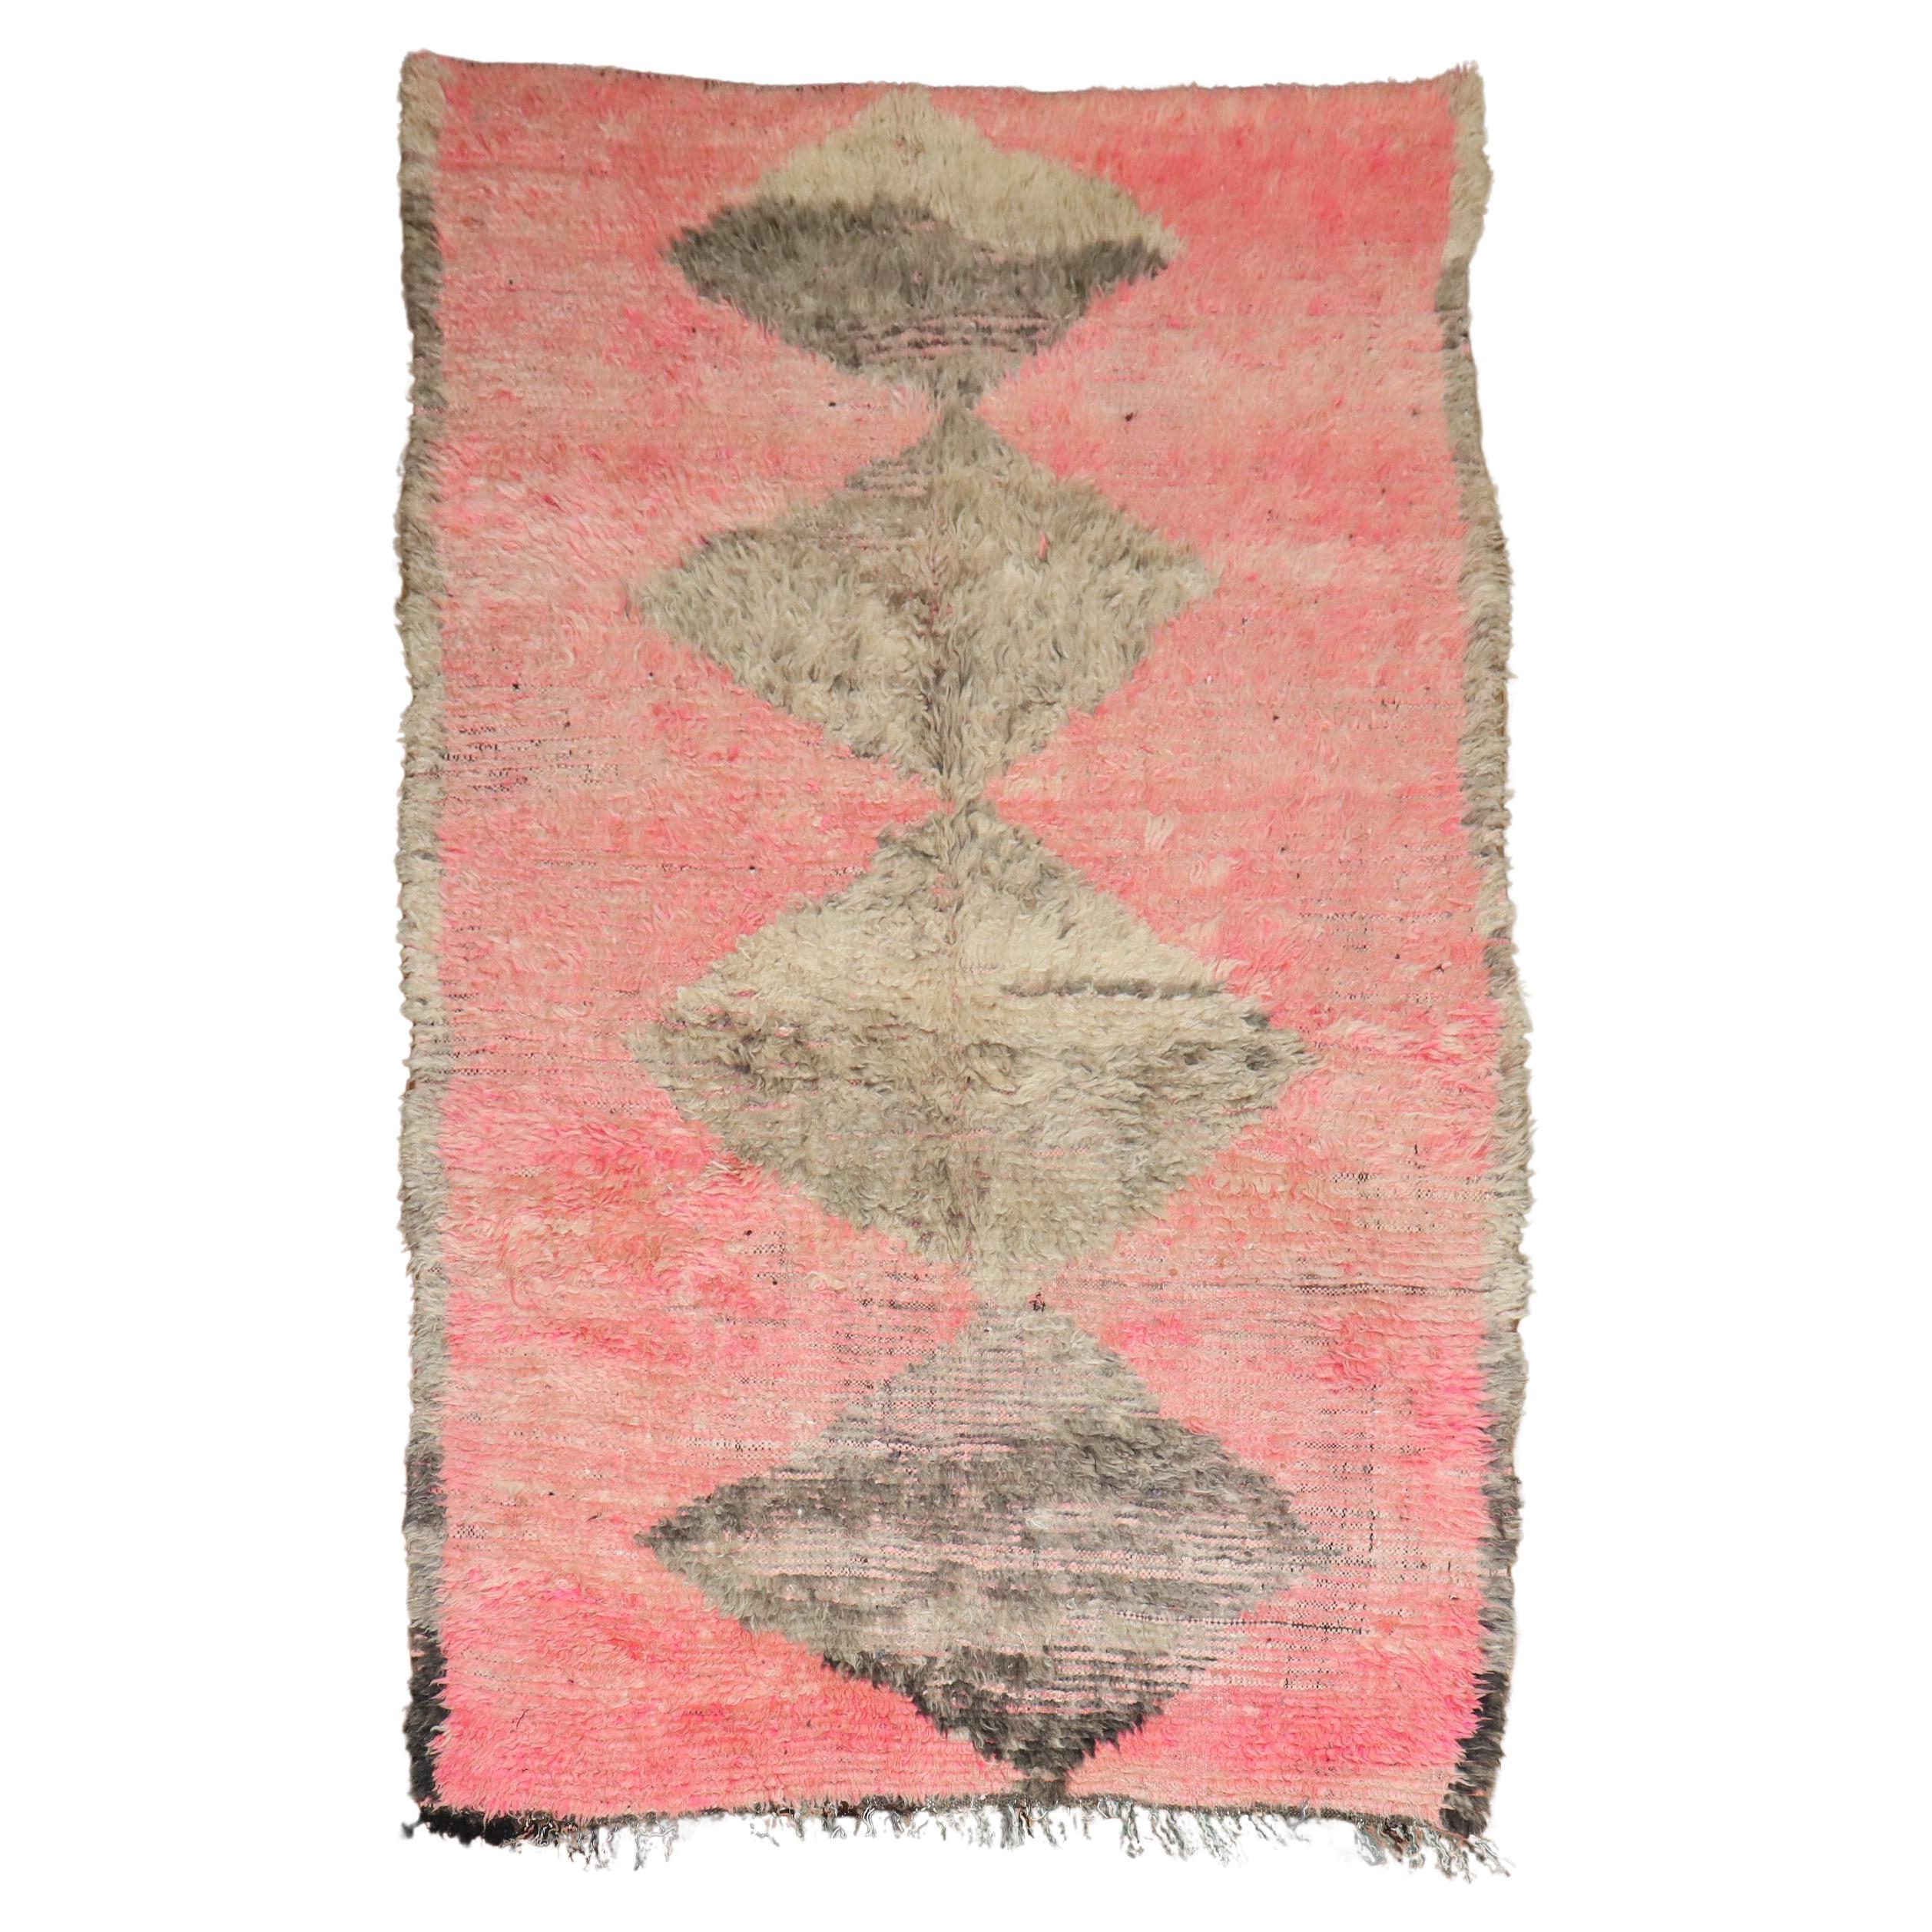 Marokkanischer abstrakter Vintage-Teppich der Zabihi Kollektion in Rosa